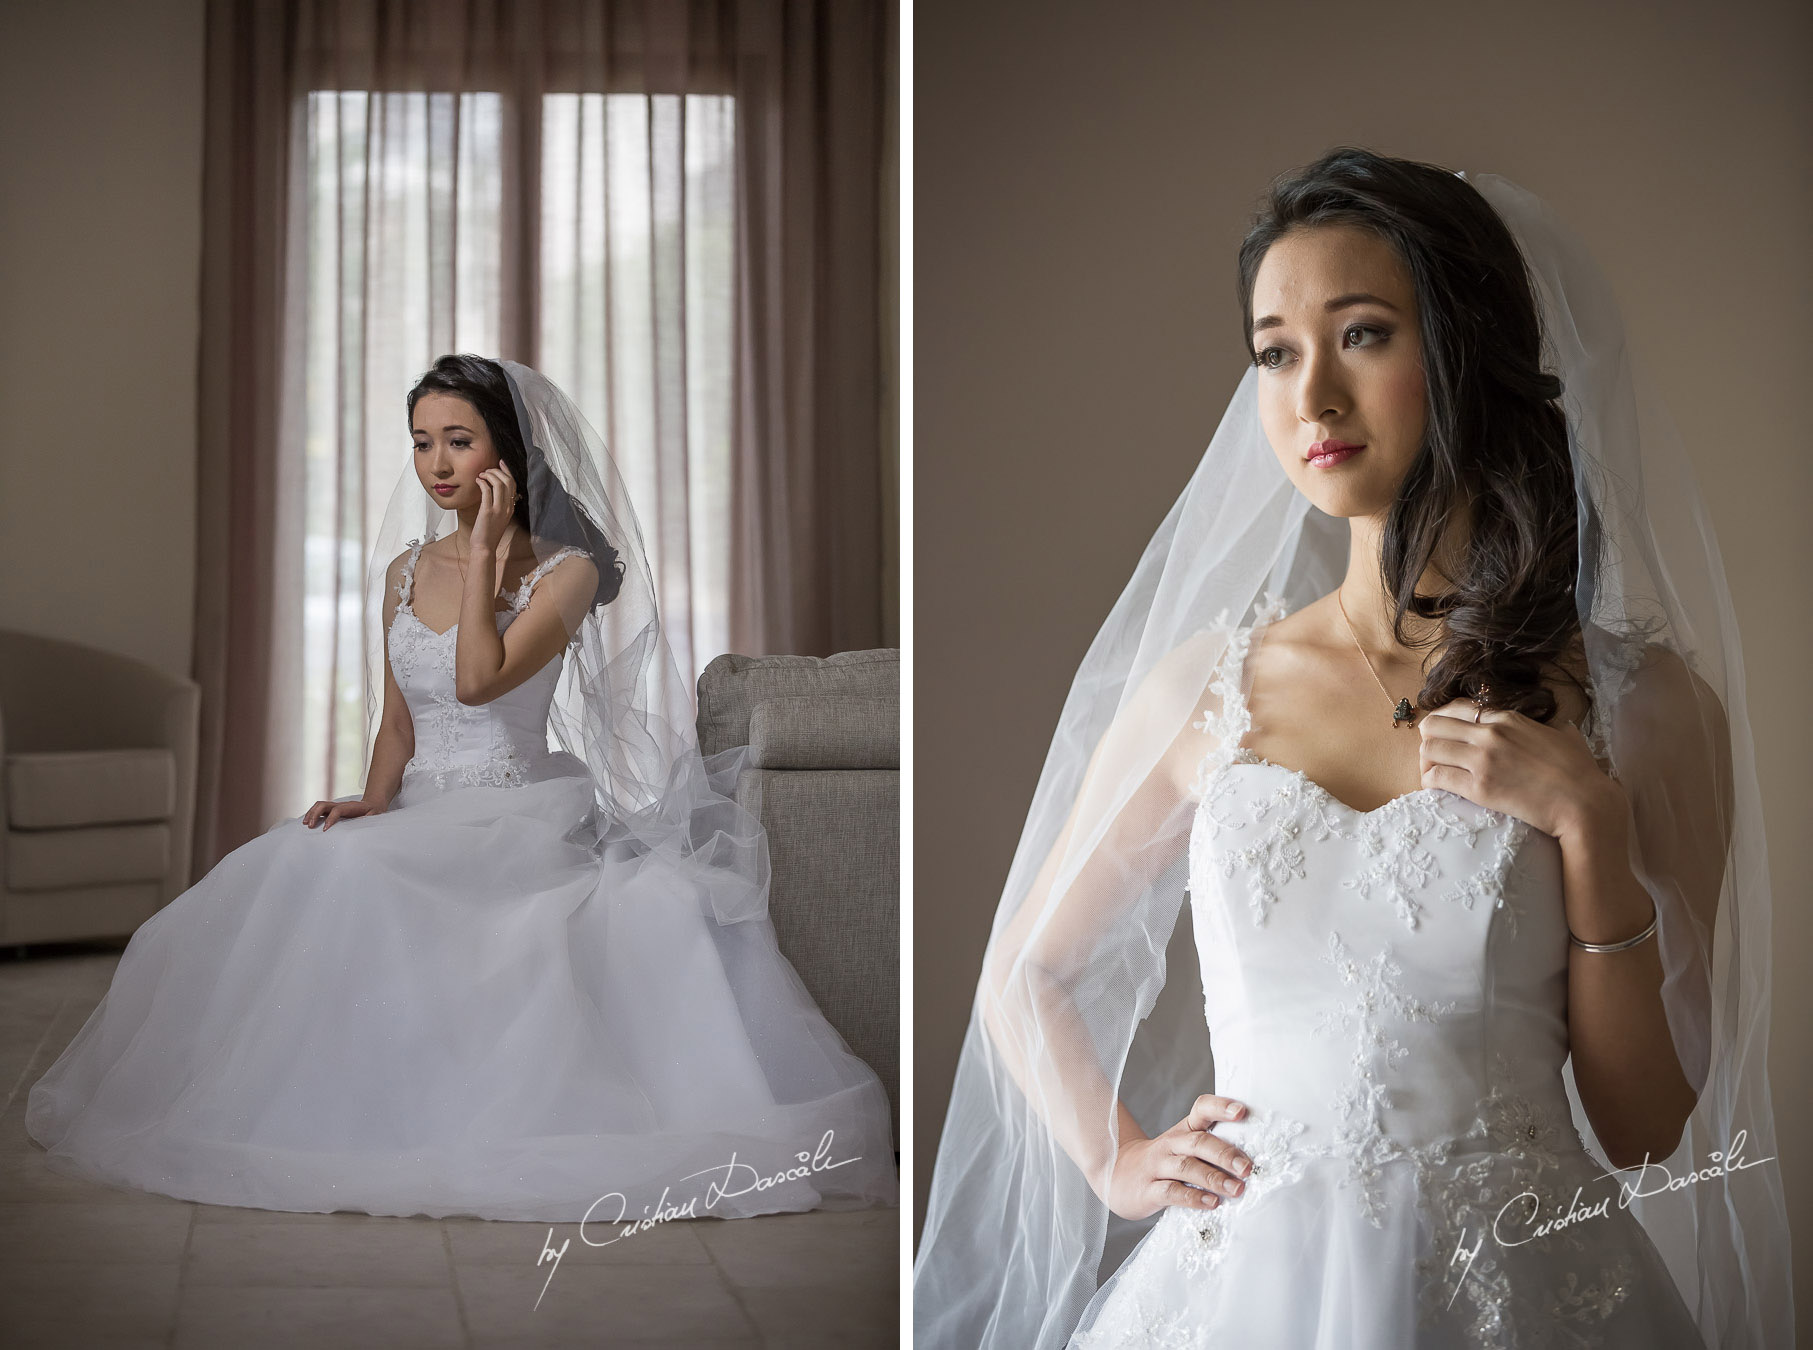 Pre Wedding Photoshoot in Cyprus - 01